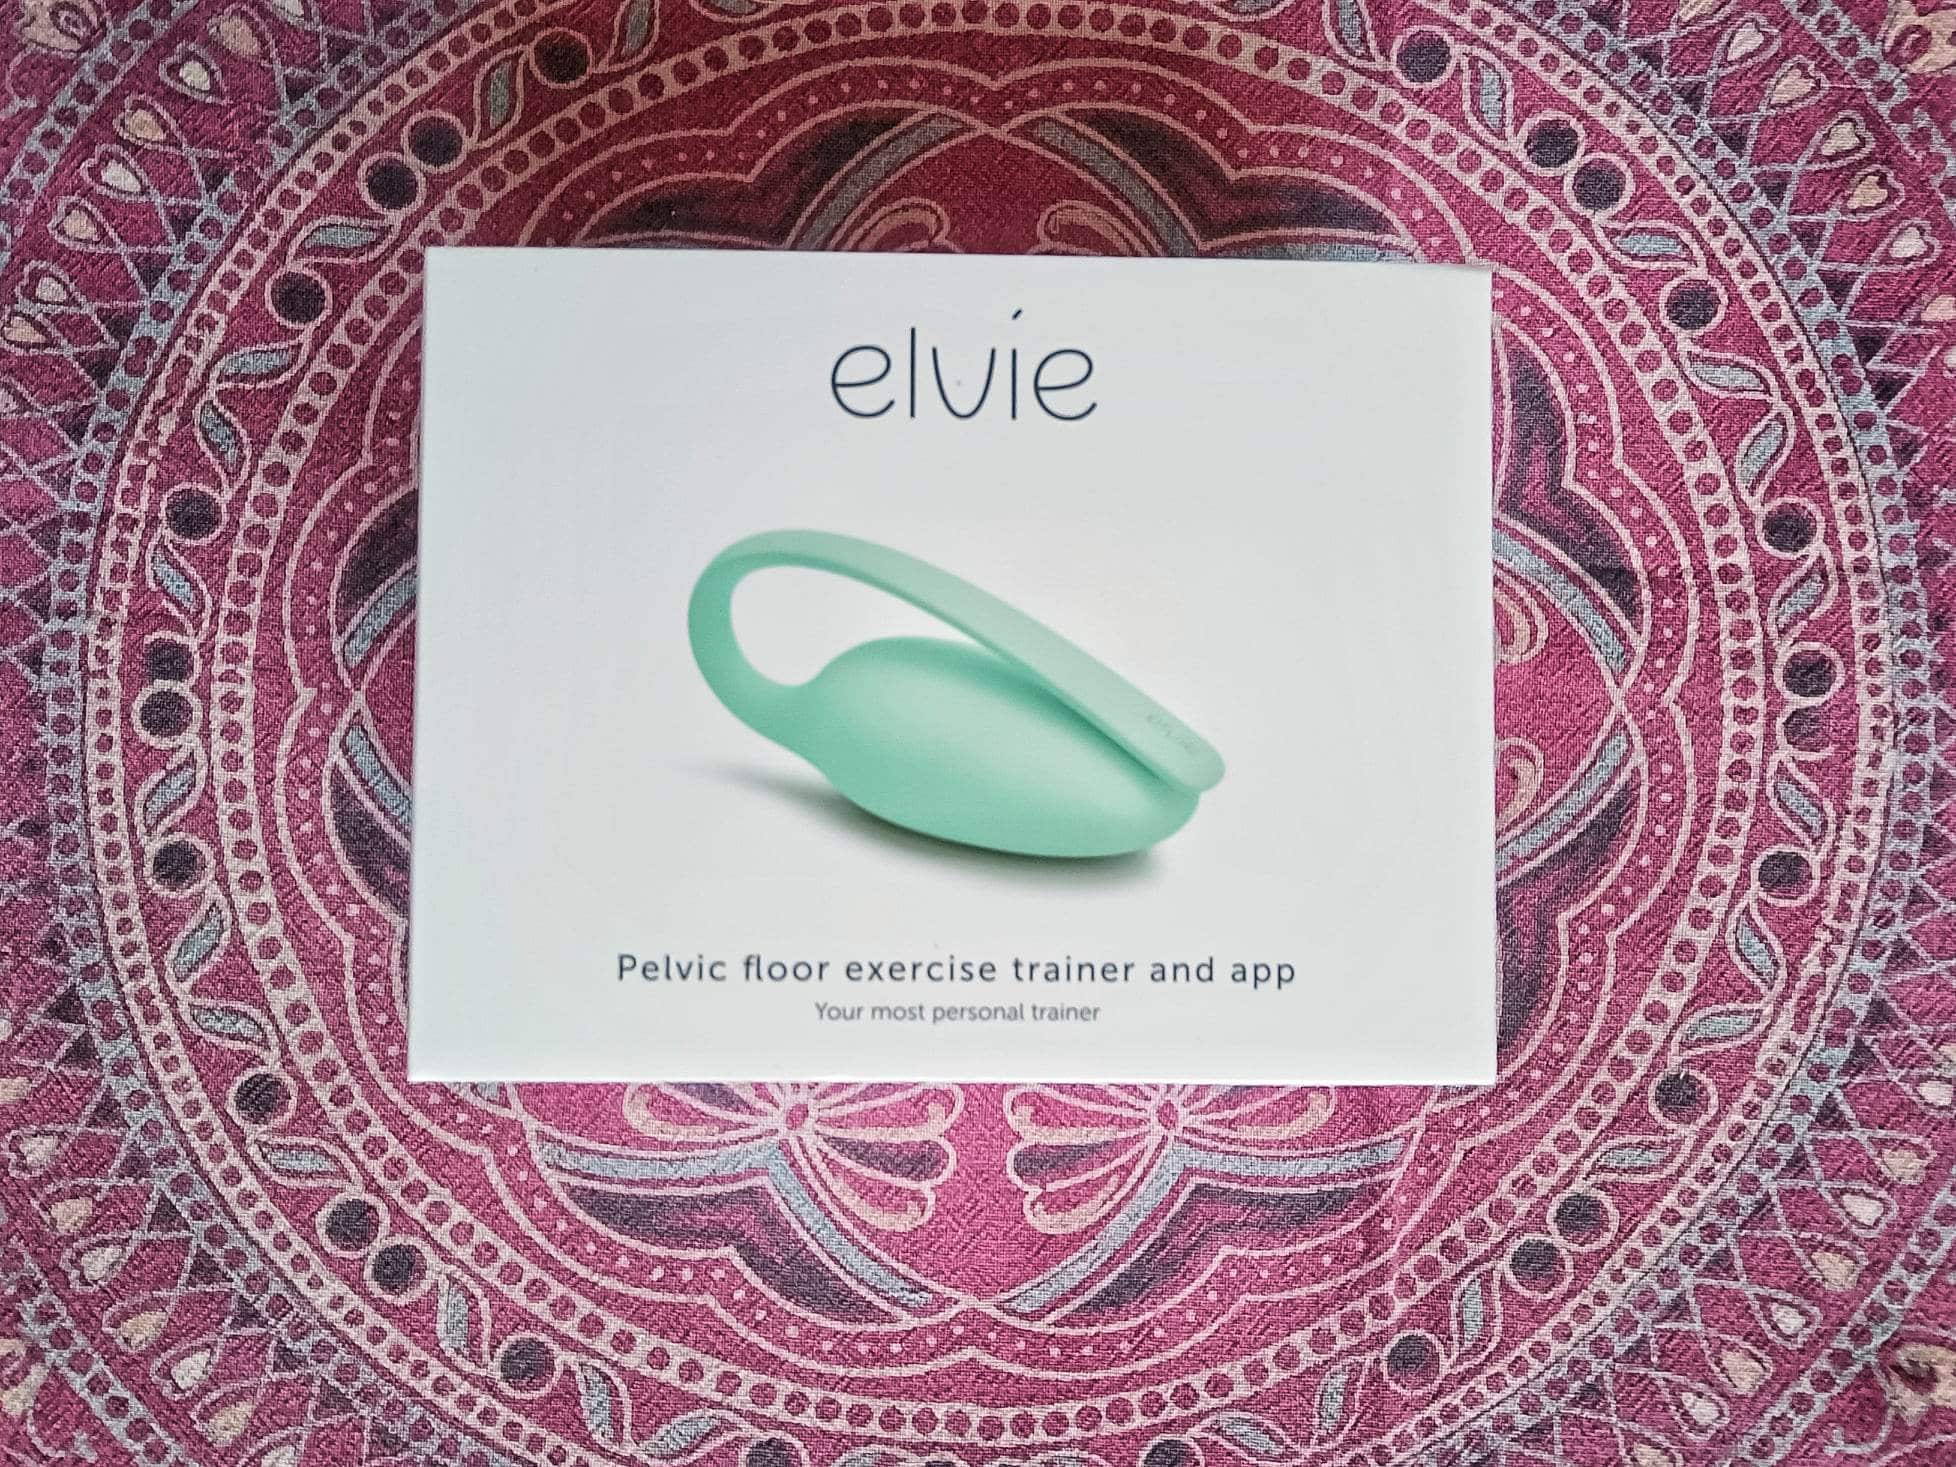 Elvie Trainer Packaging of the Elvie Trainer